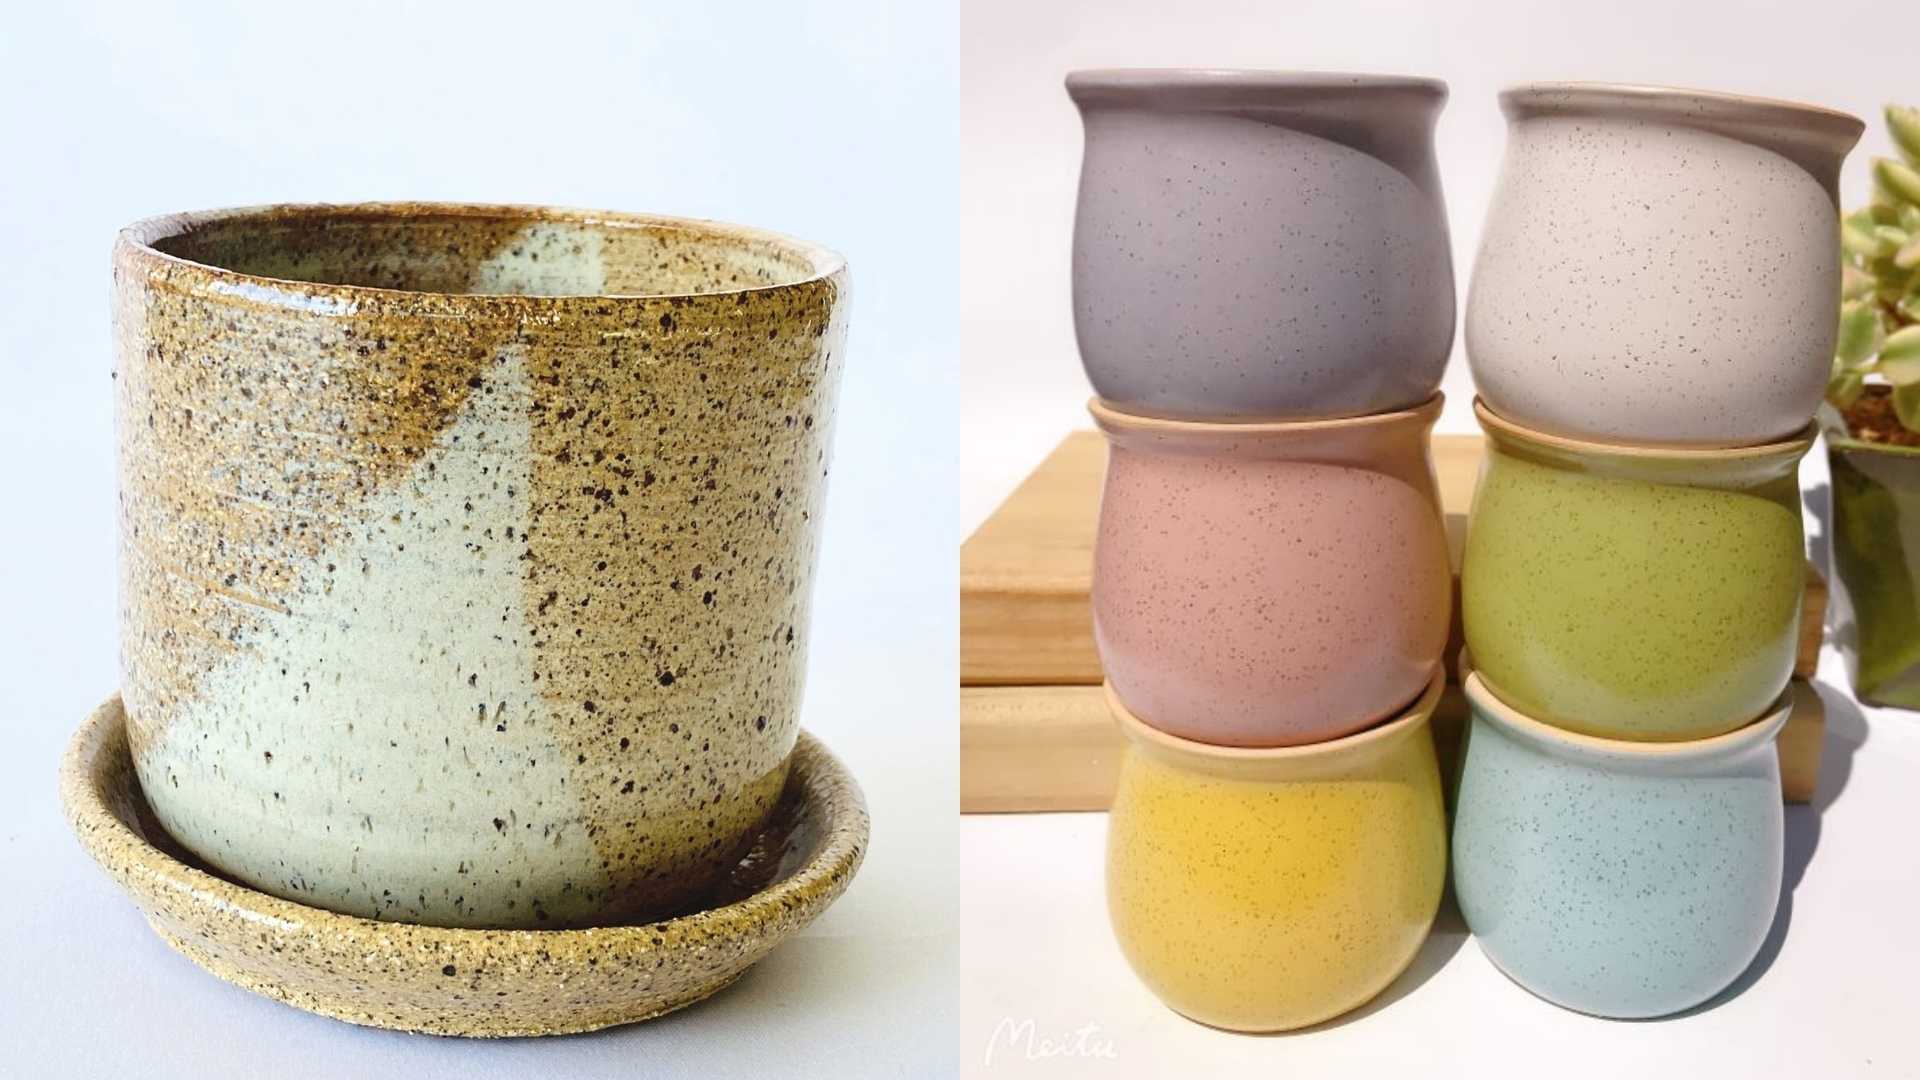 Examples of different ceramic plant pots.